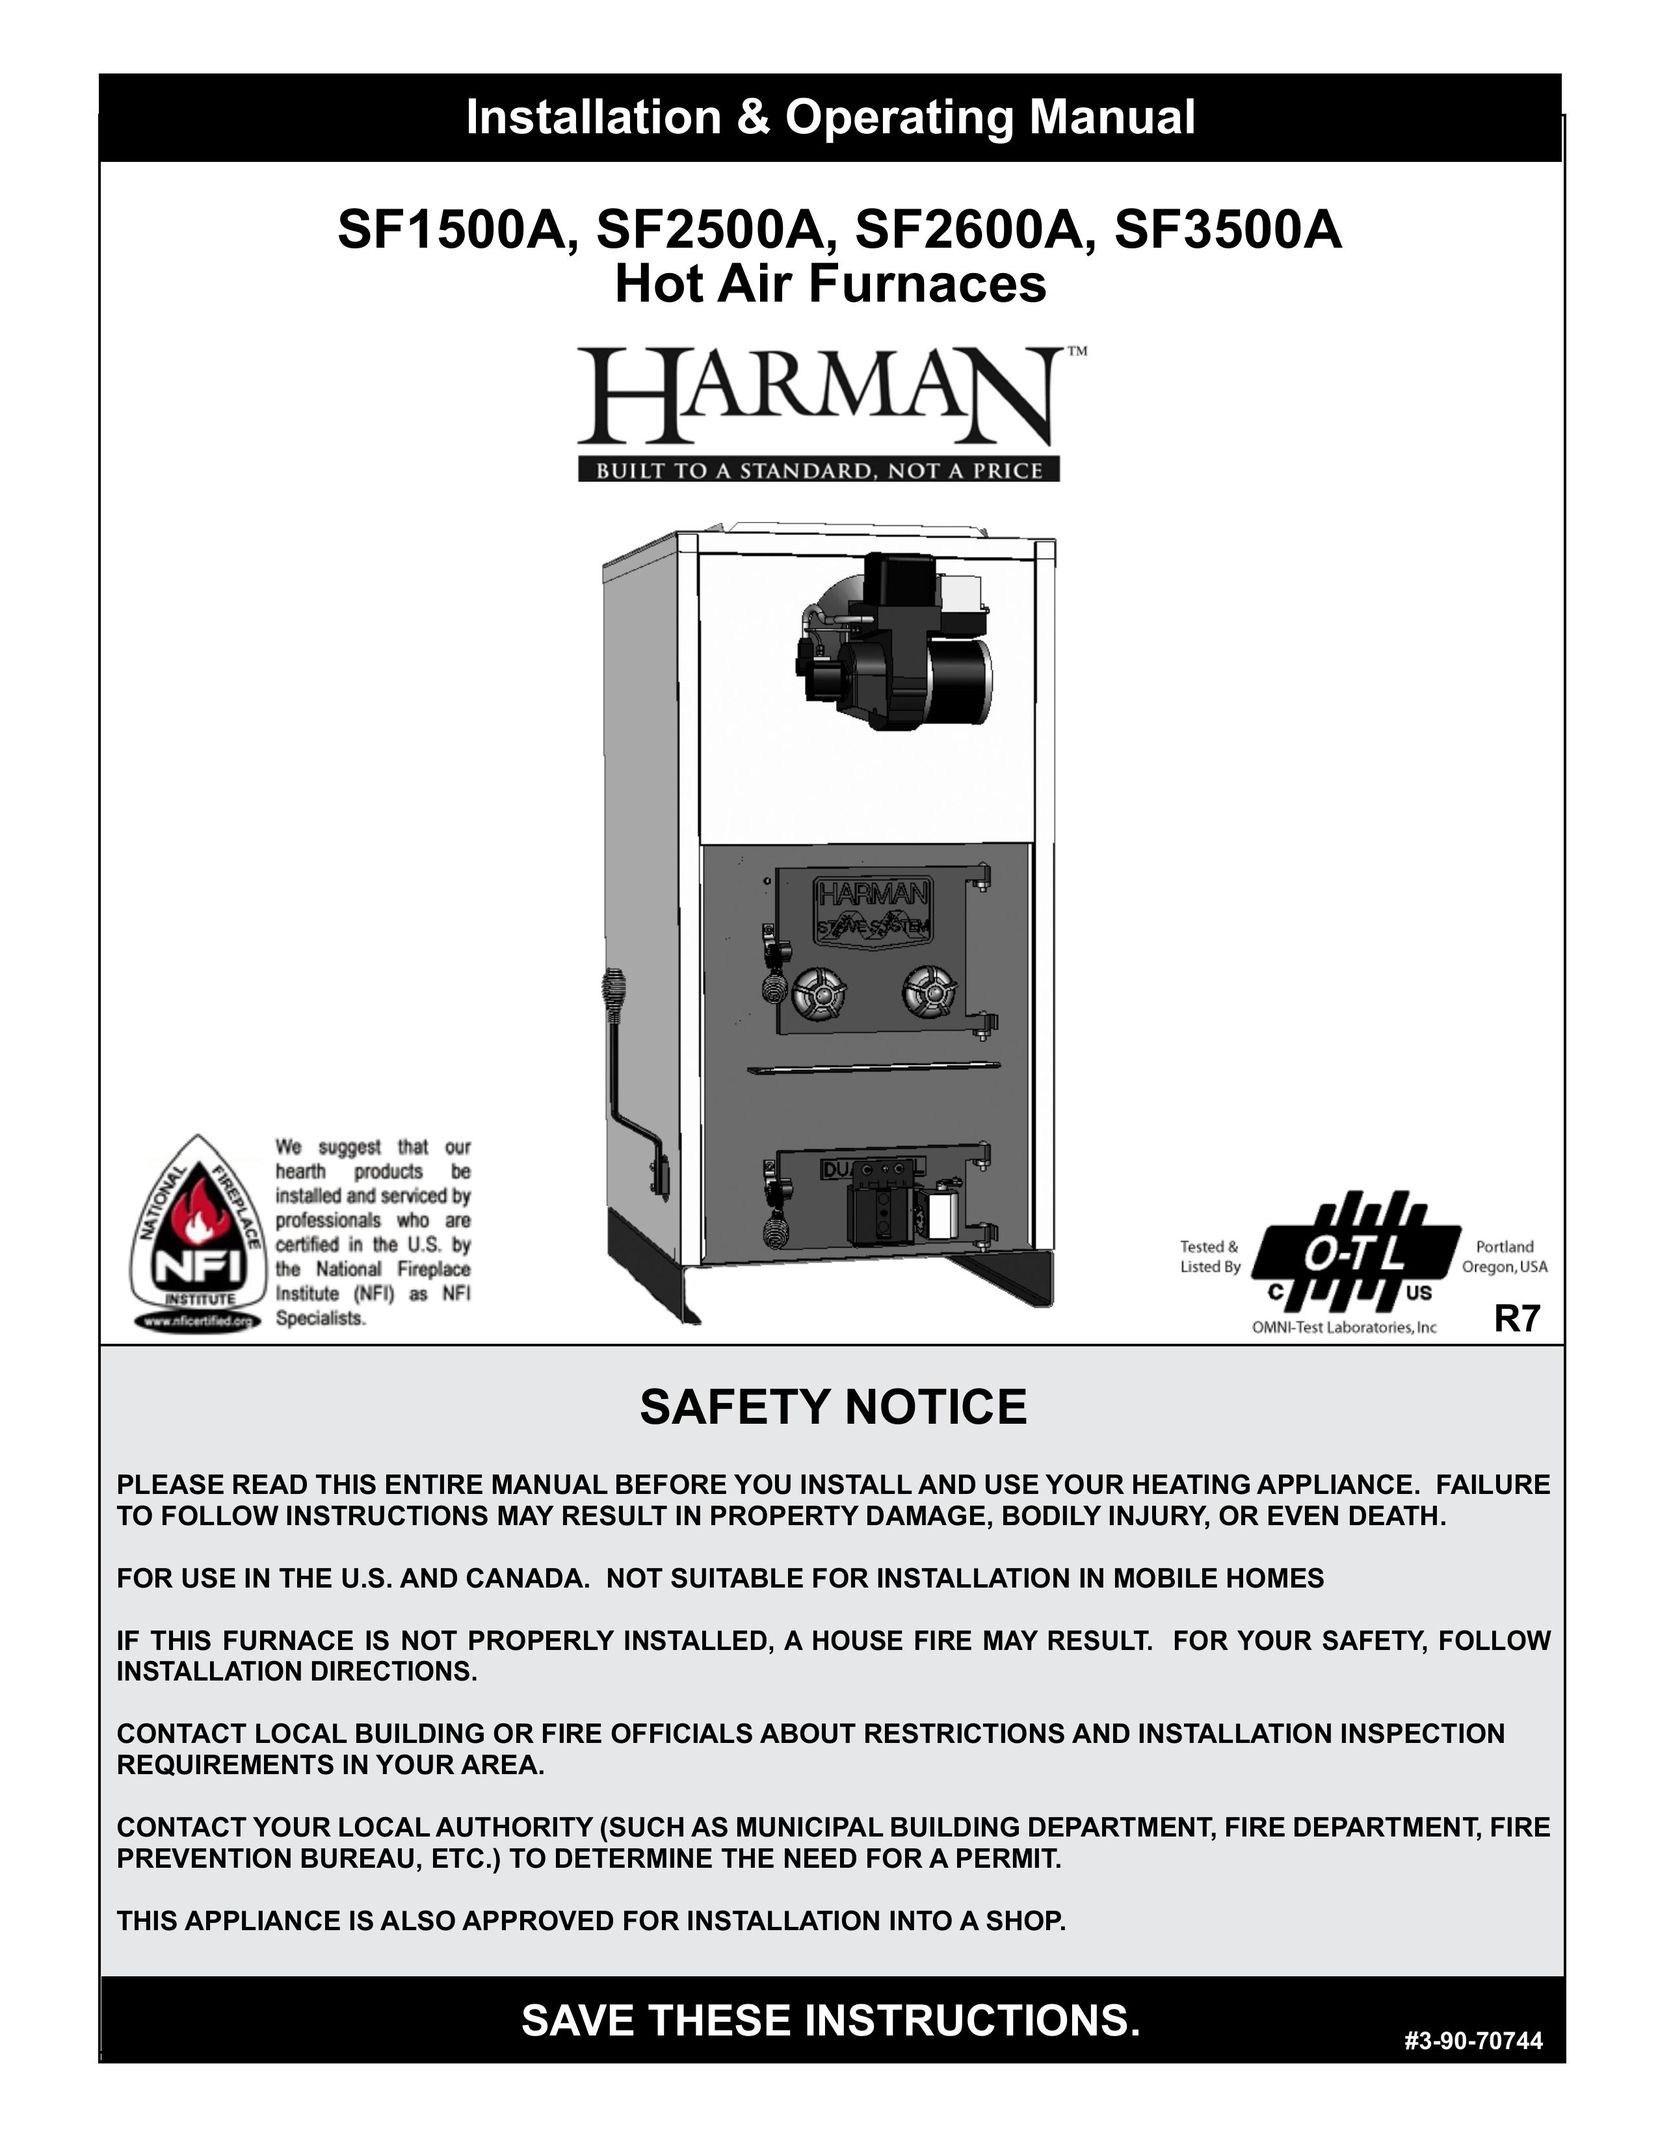 Harman Stove Company SF1500A Furnace User Manual